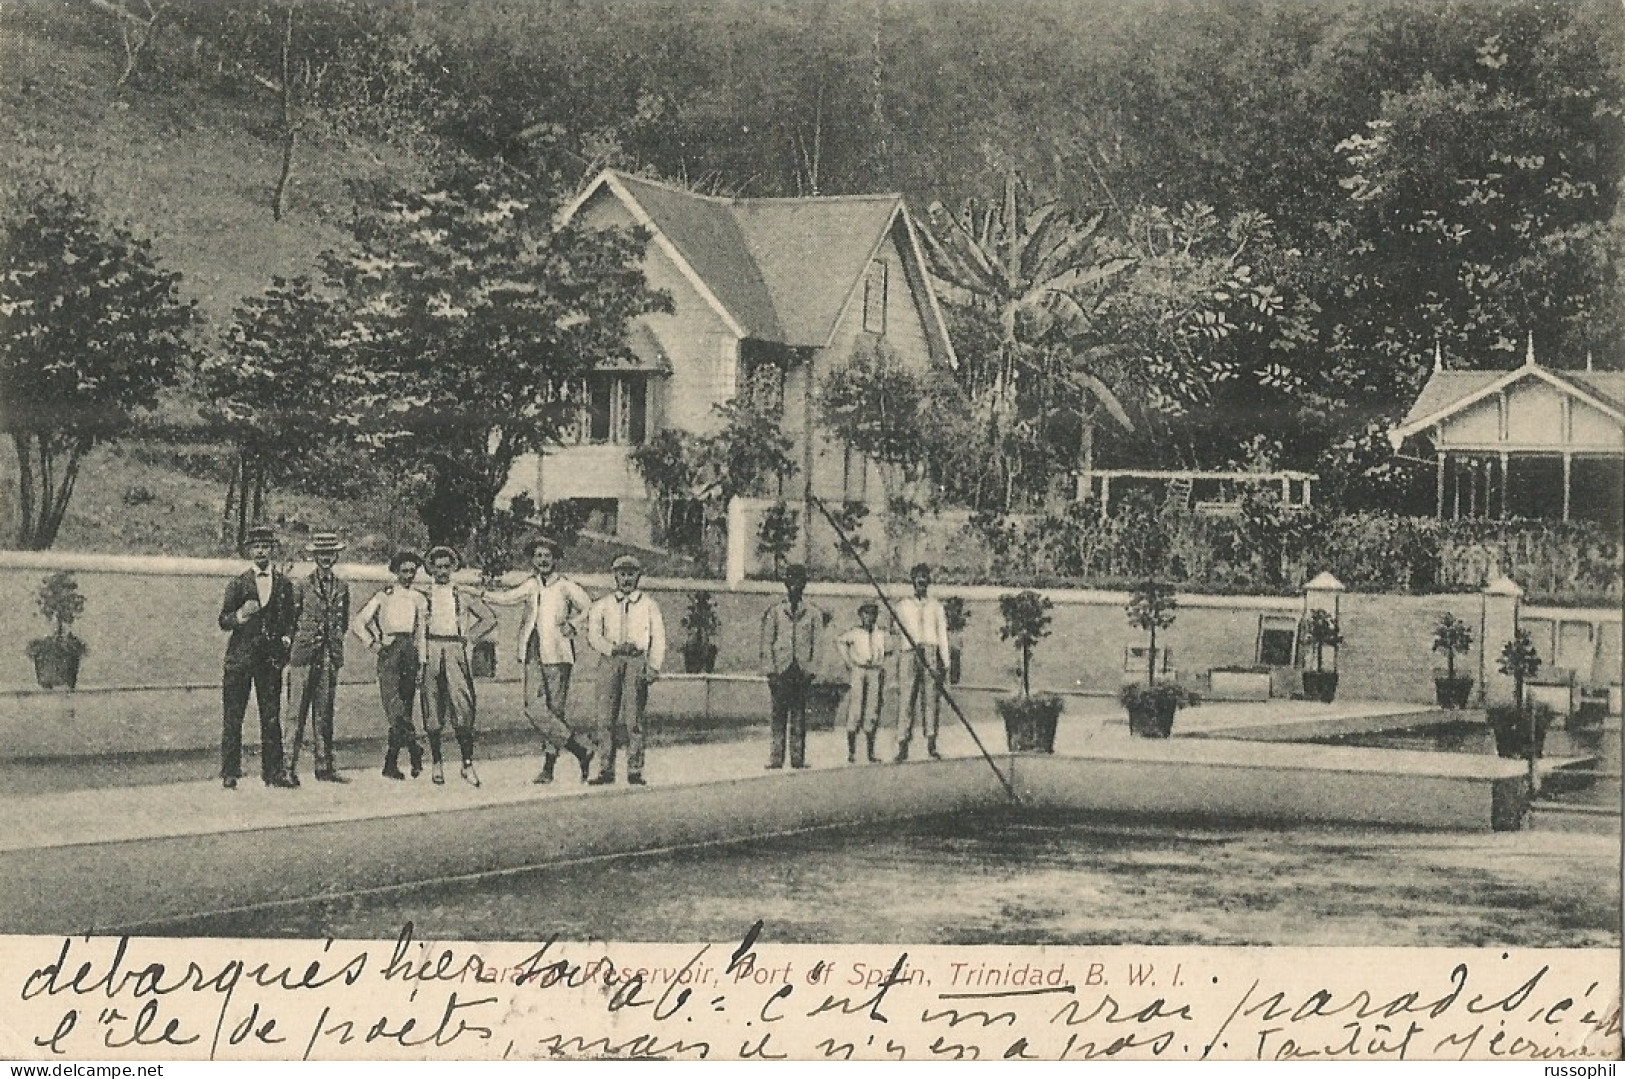 TRINIDAD - B.W.I. - MARAVAL RESERVOIR, PORT OF SPAIN - 1908 - Trinidad